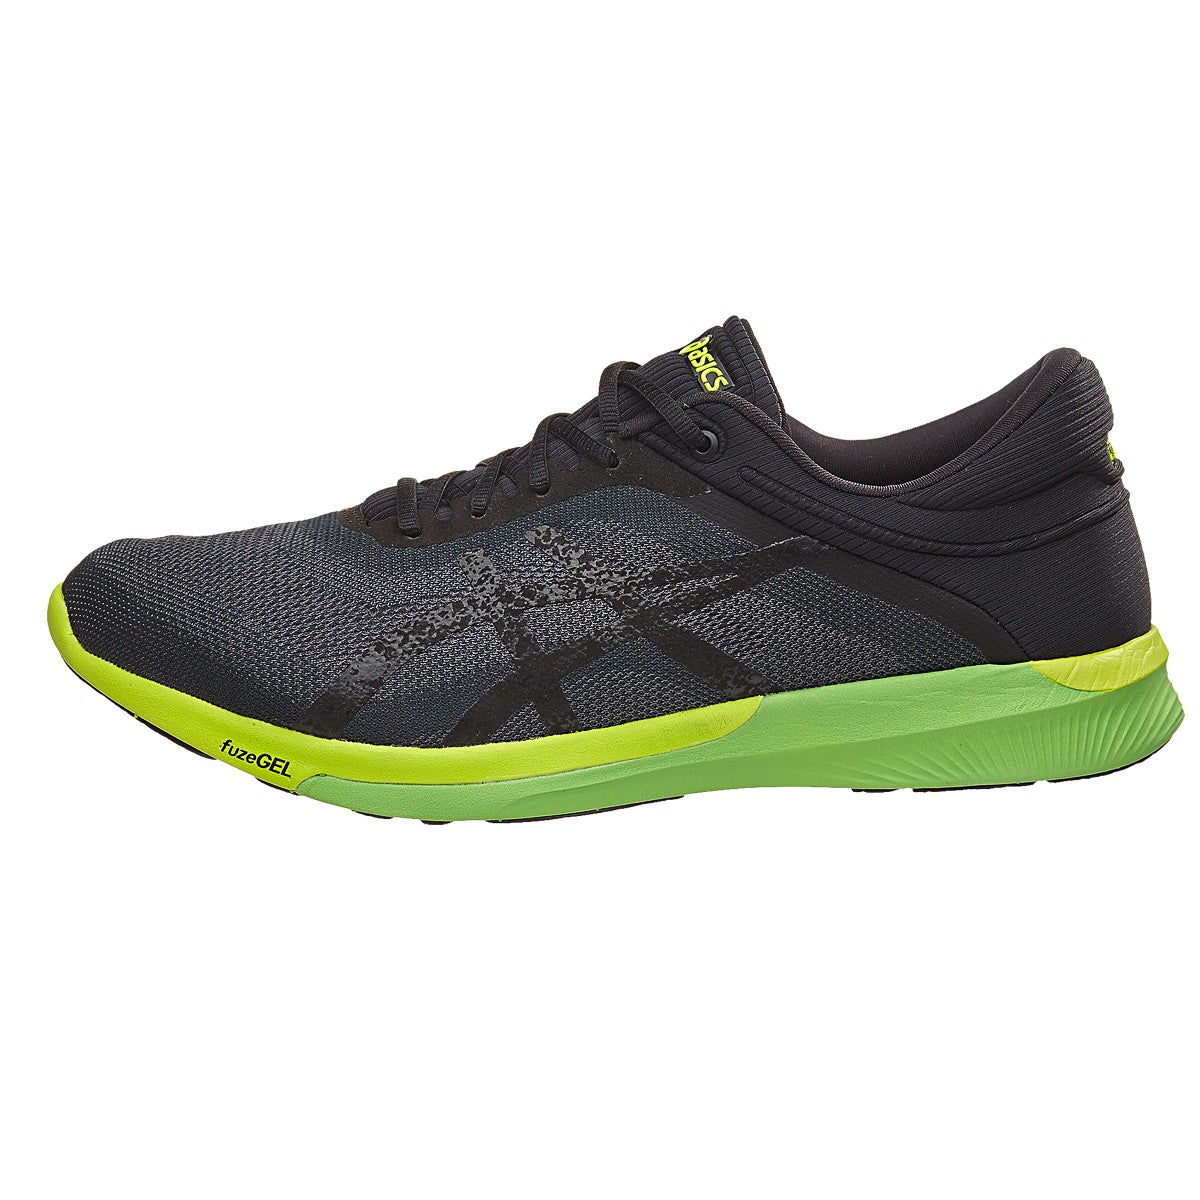 ASICS FuzeX Rush Men's Shoes Carbon/Black/Yellow 360° View | Running ...